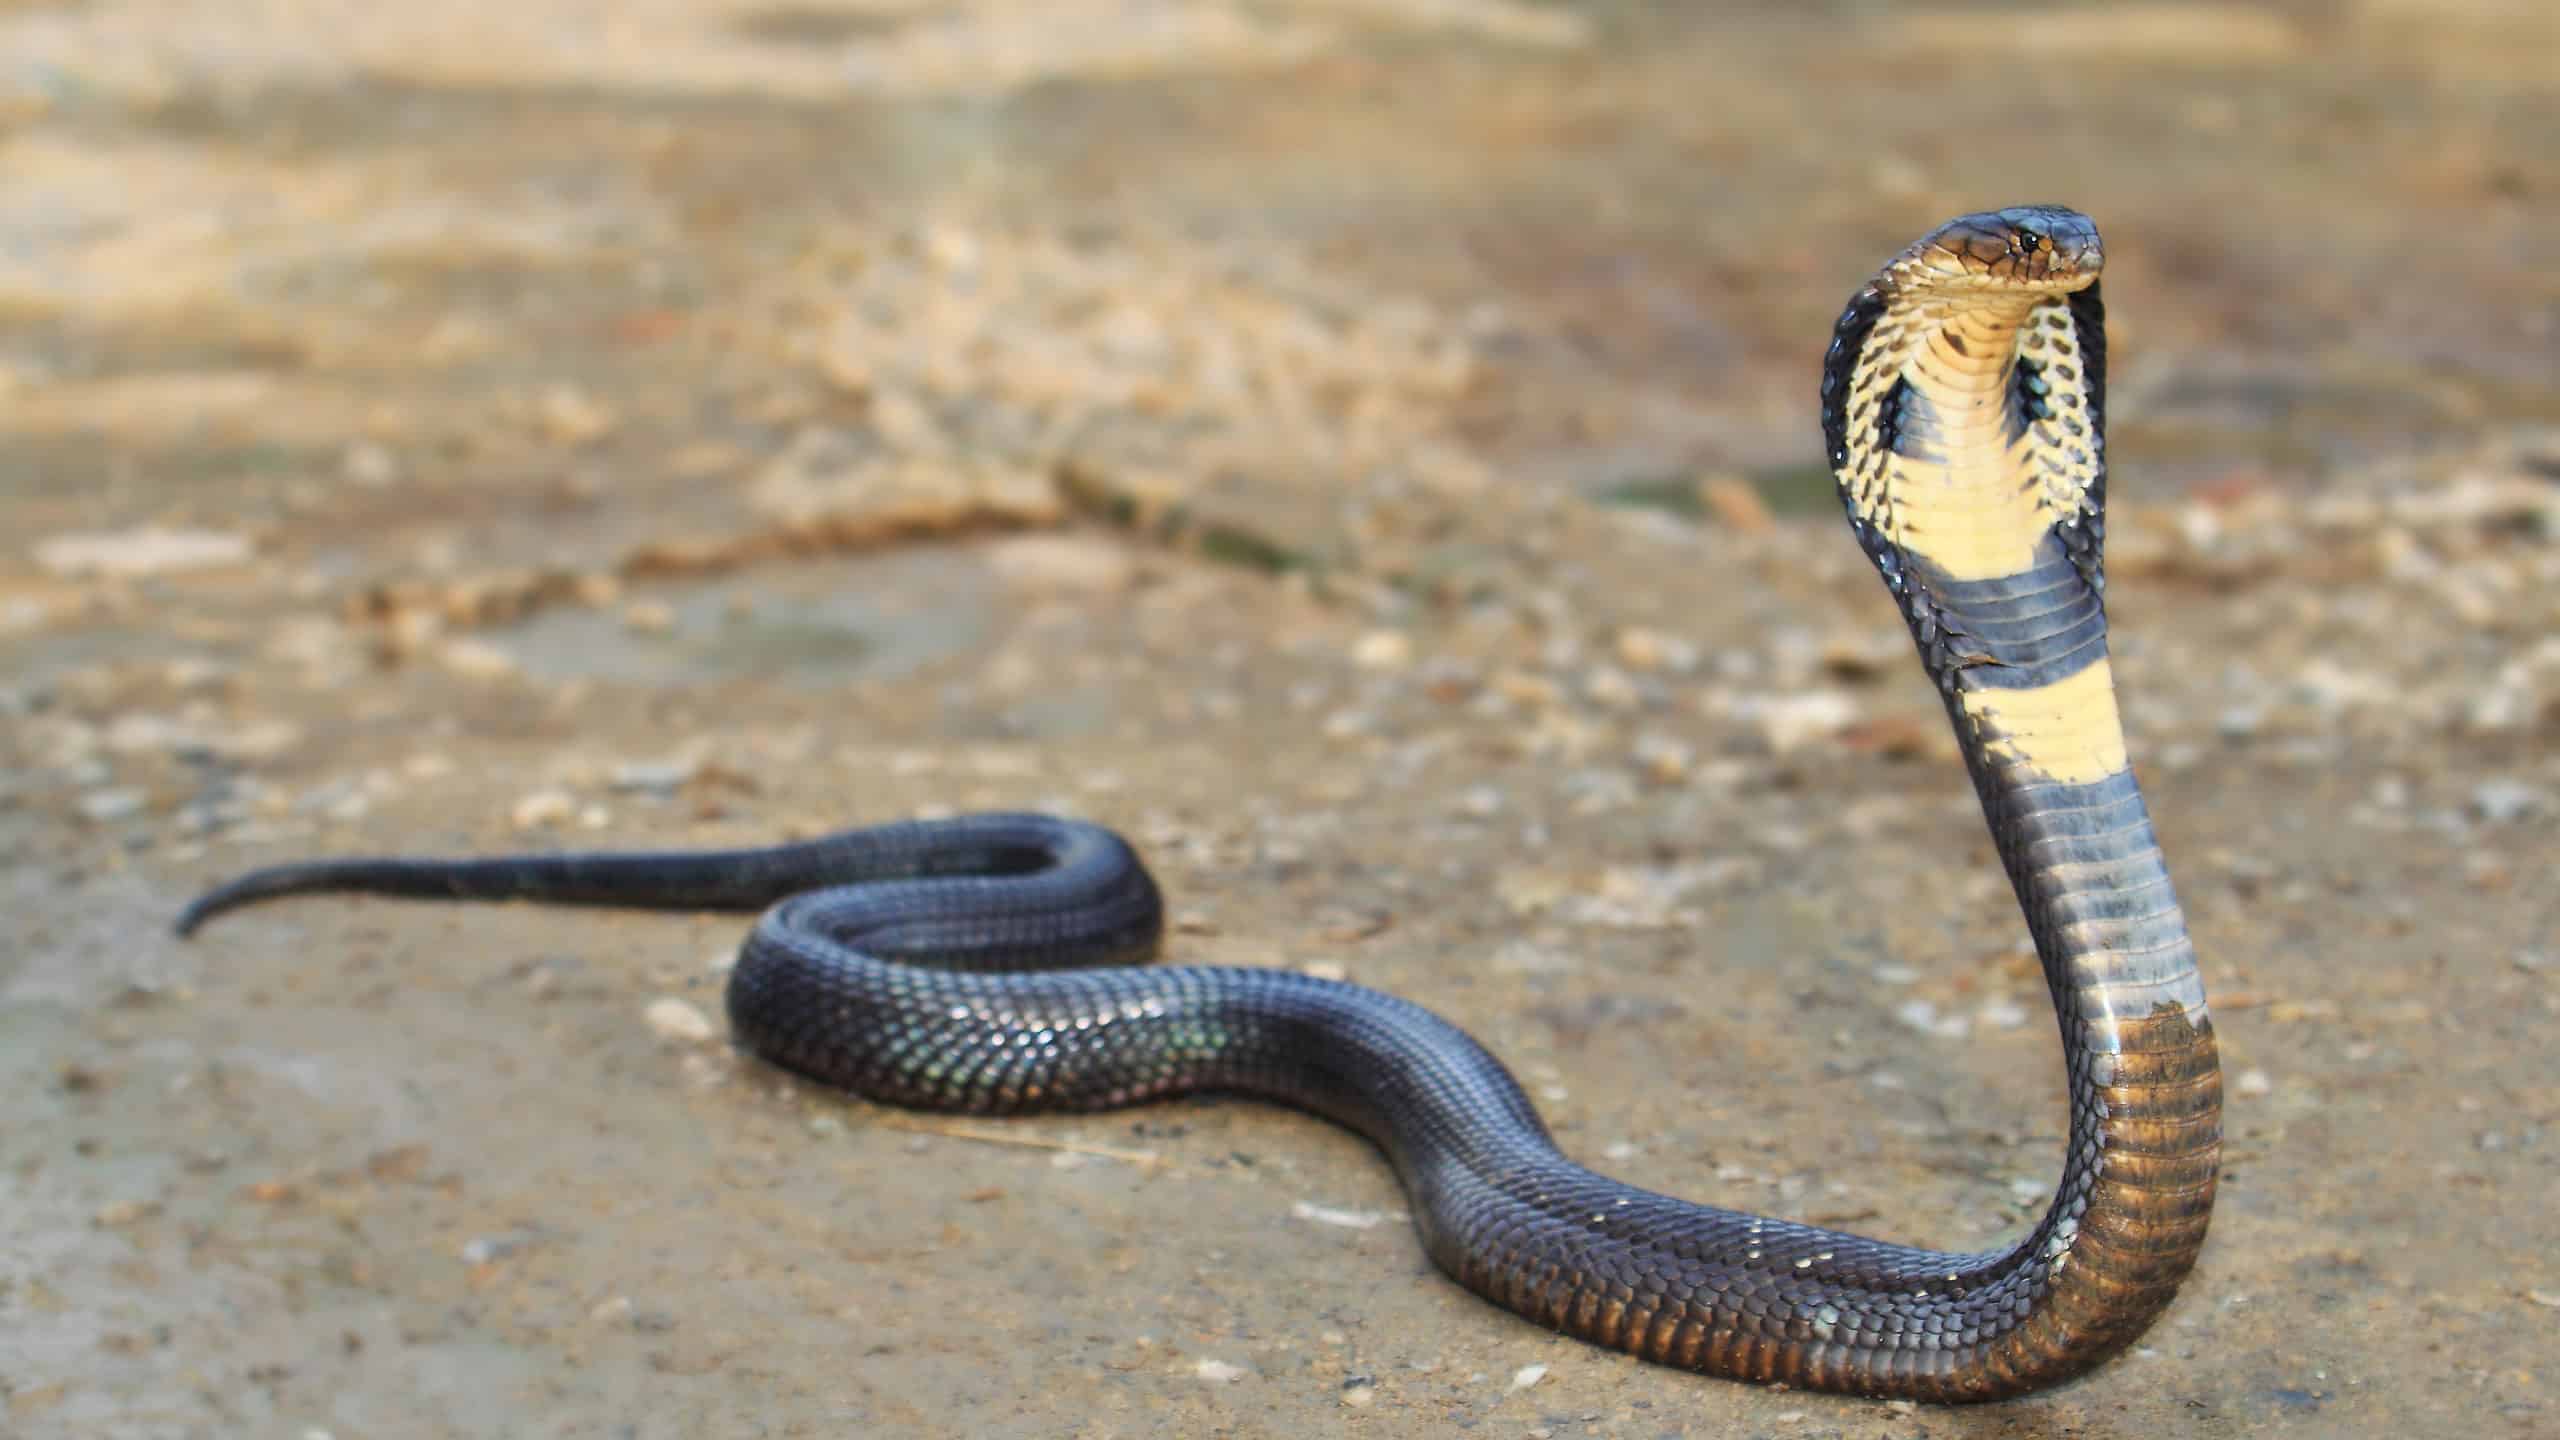 Cobra with raised heads